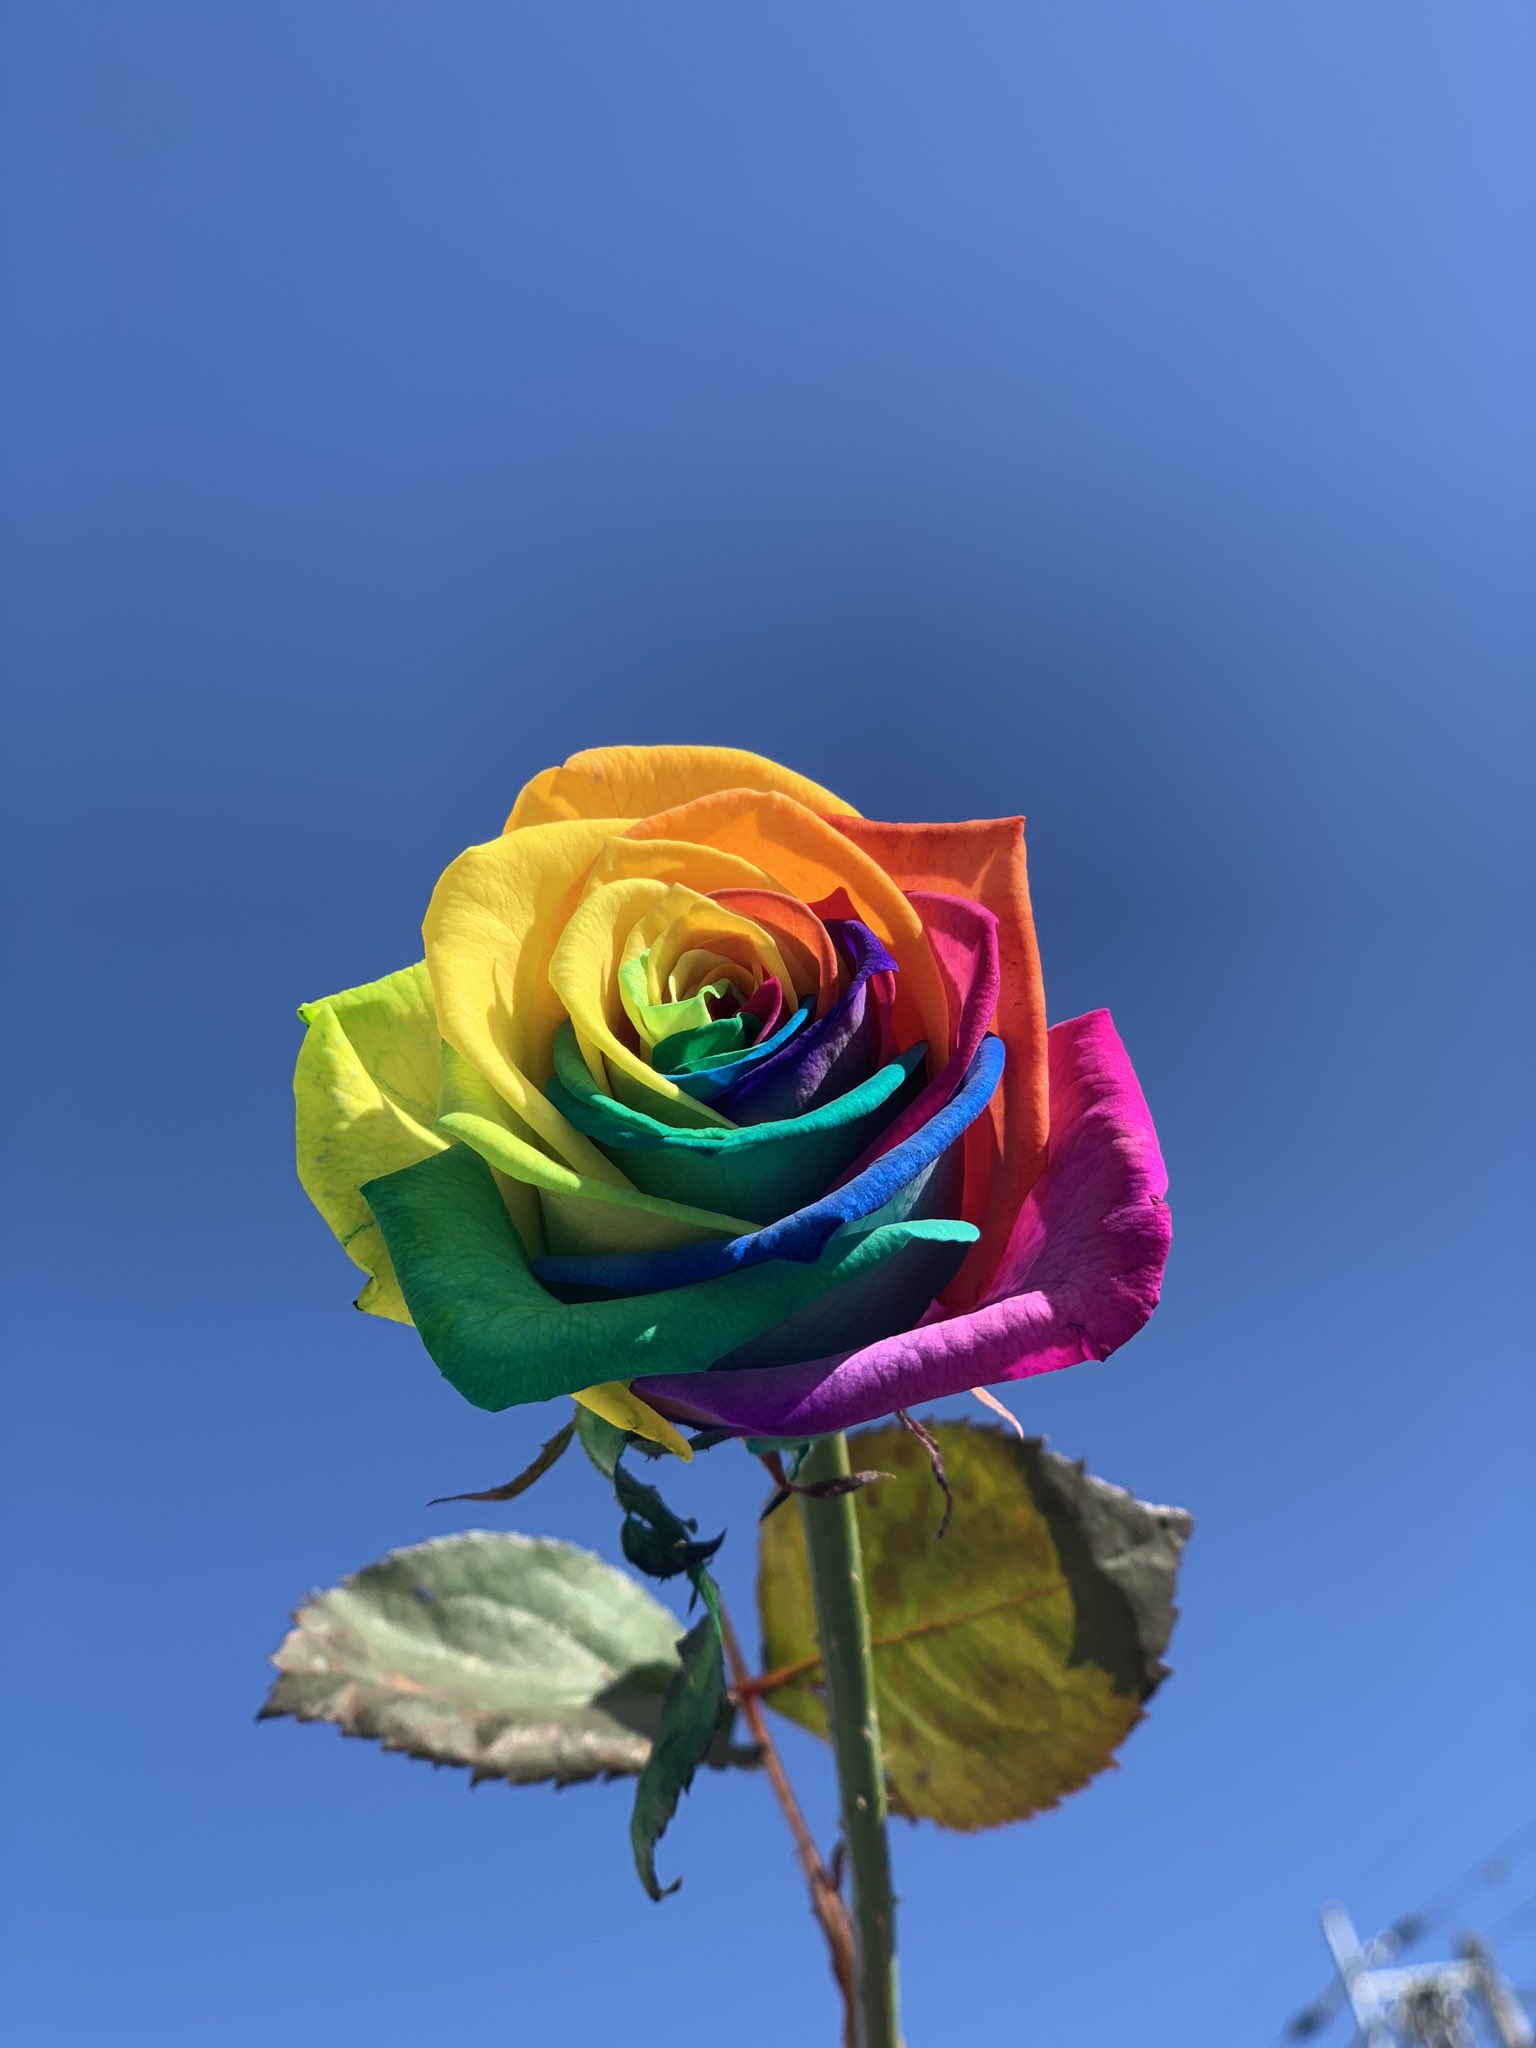 Twitter 上的 ローズショップ レインボーローズの花言葉は 奇跡 花びら1枚1枚の色が違う印象的な生花のバラ オランダから空輸でスピーディーに仕入れて全国へお届けします T Co 5wbr0dadyo Twitter